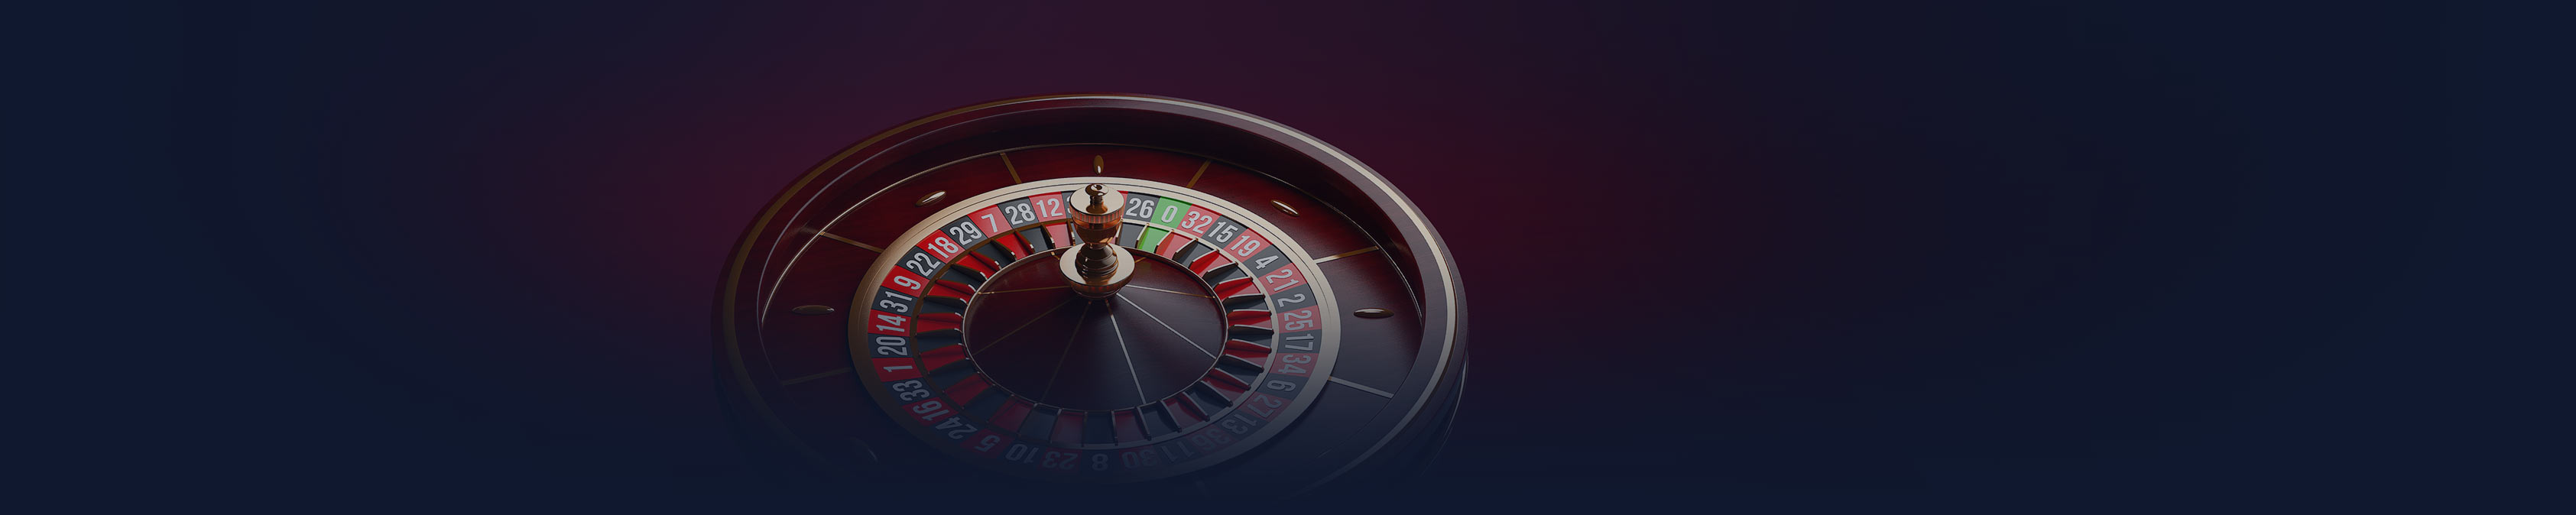 Kazino spēle Rulete lv.casinosearch.eu